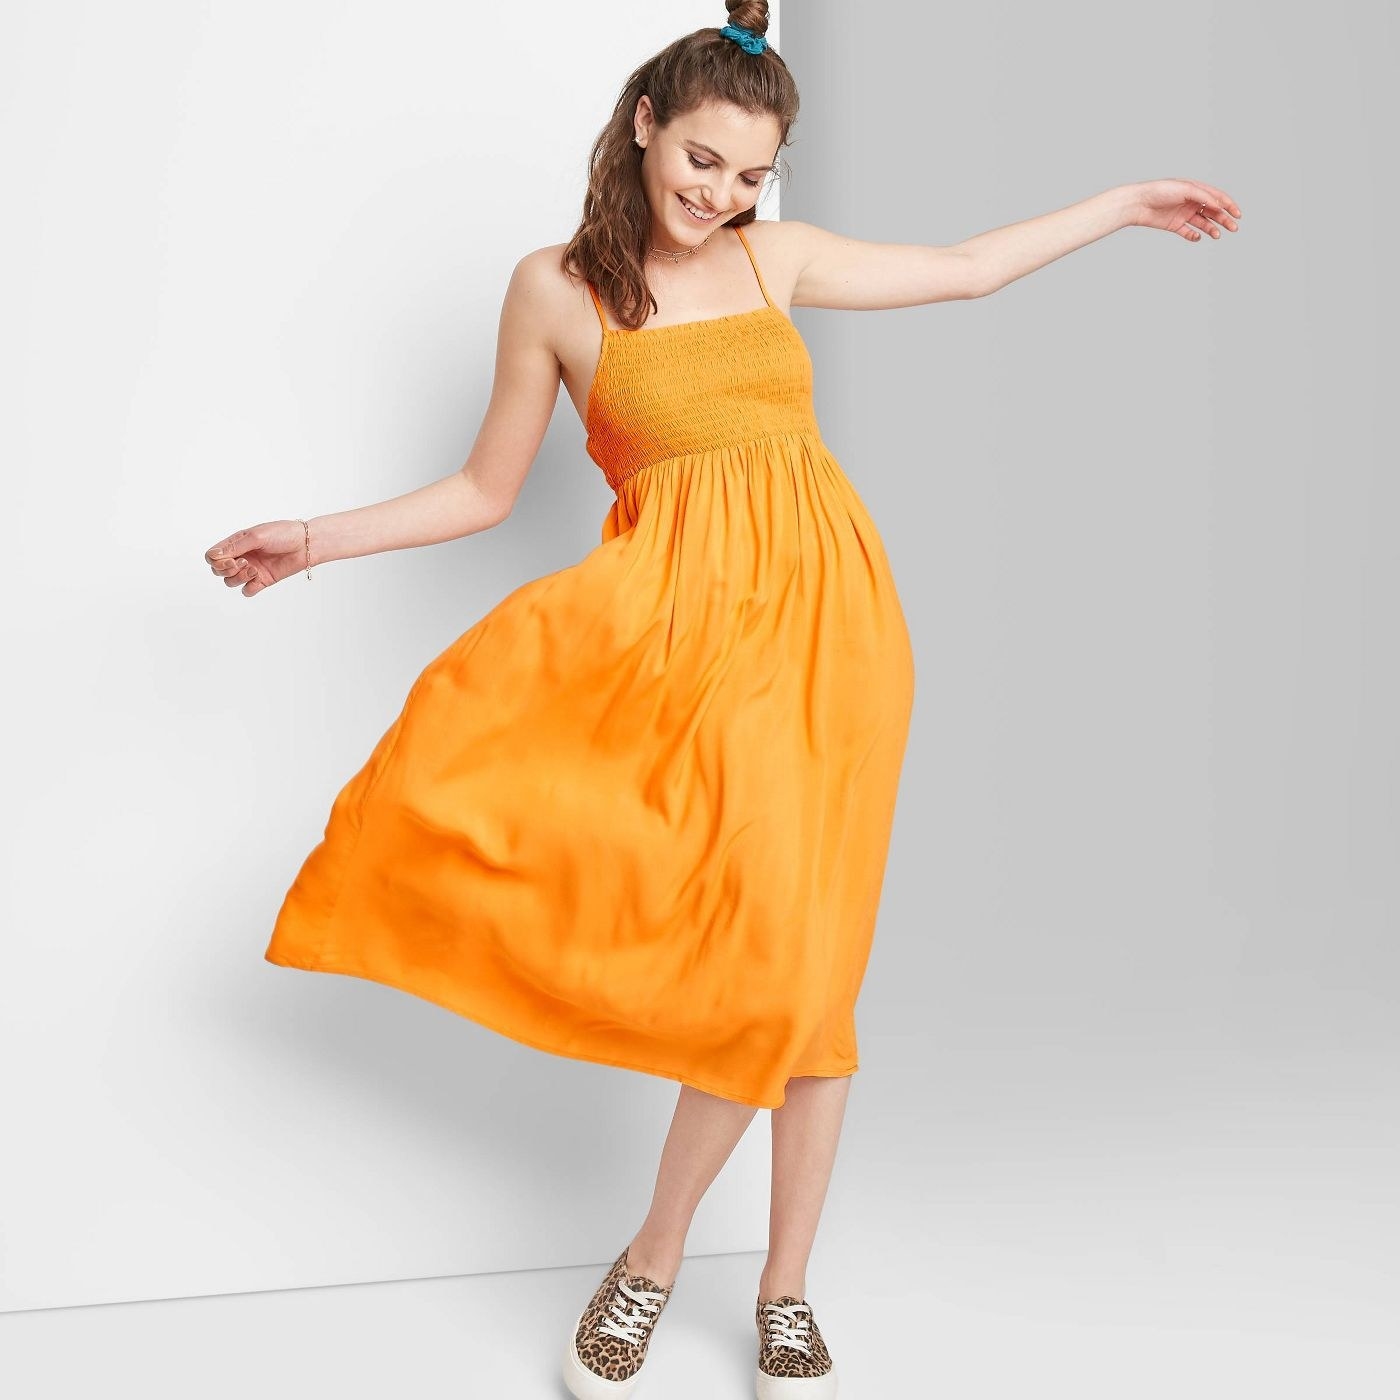 A model wearing a yellow sleeveless smocked dress